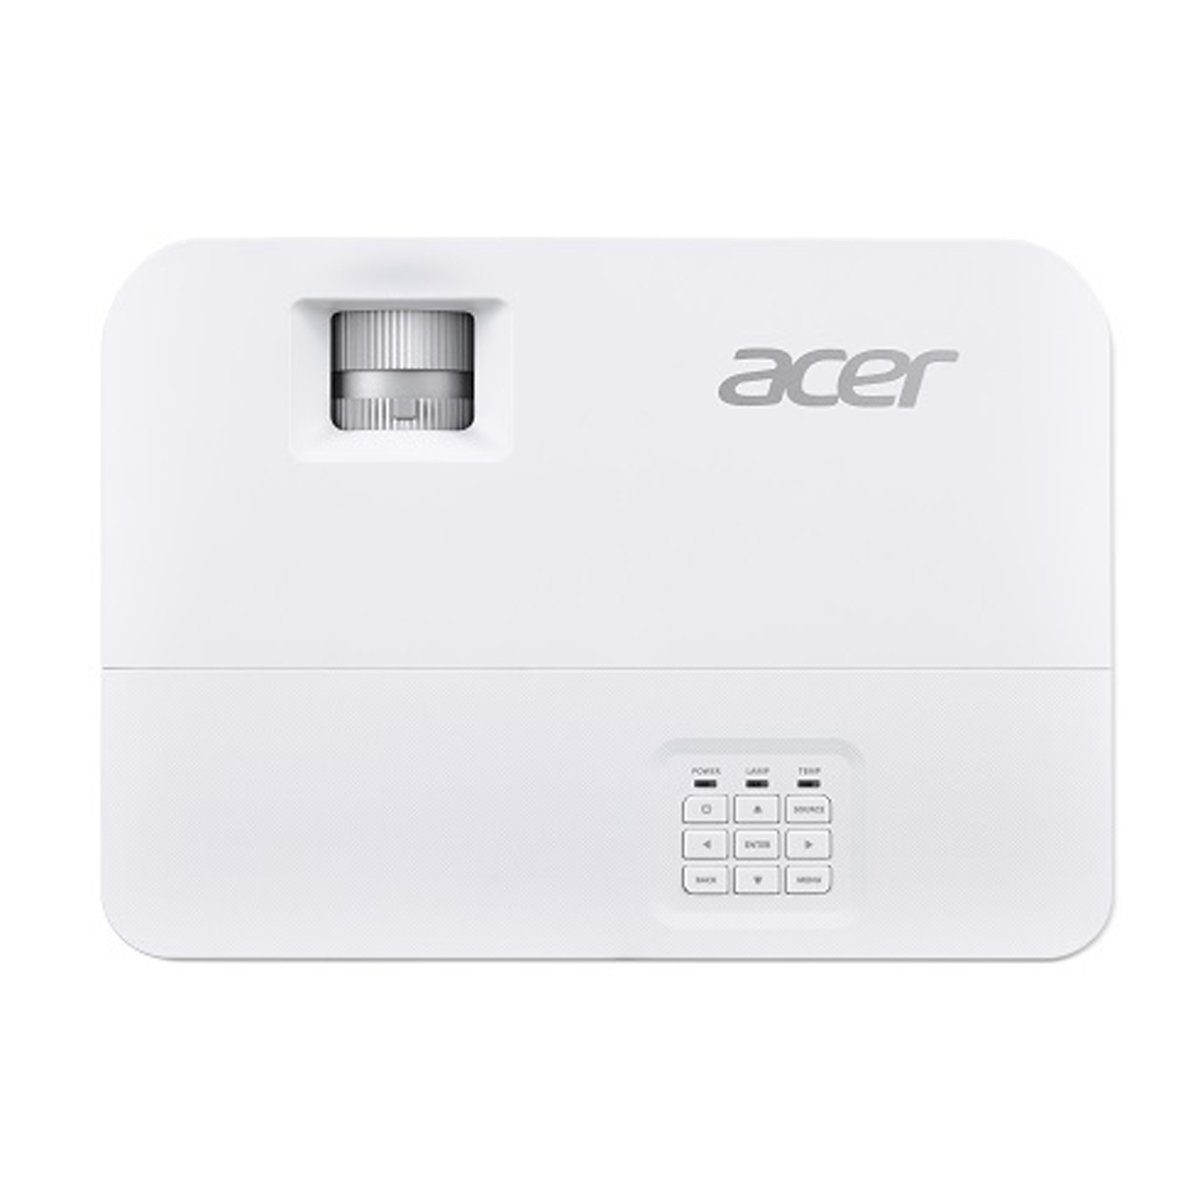 Acer x 1920 (4800 Beamer lm, 10000:1, 1080 P1557Ki px)